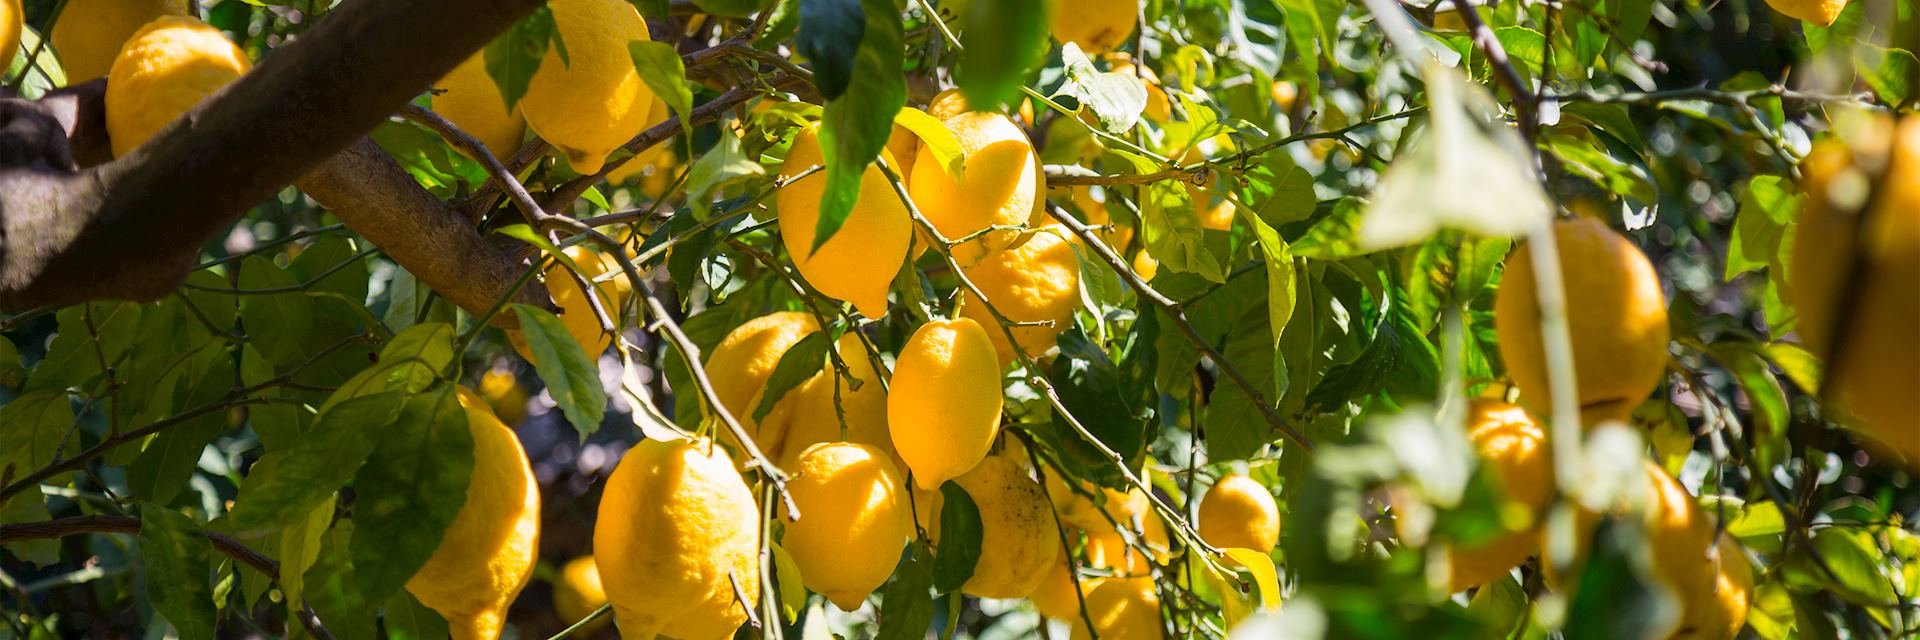 Lemon trees in Sorrento, Italy